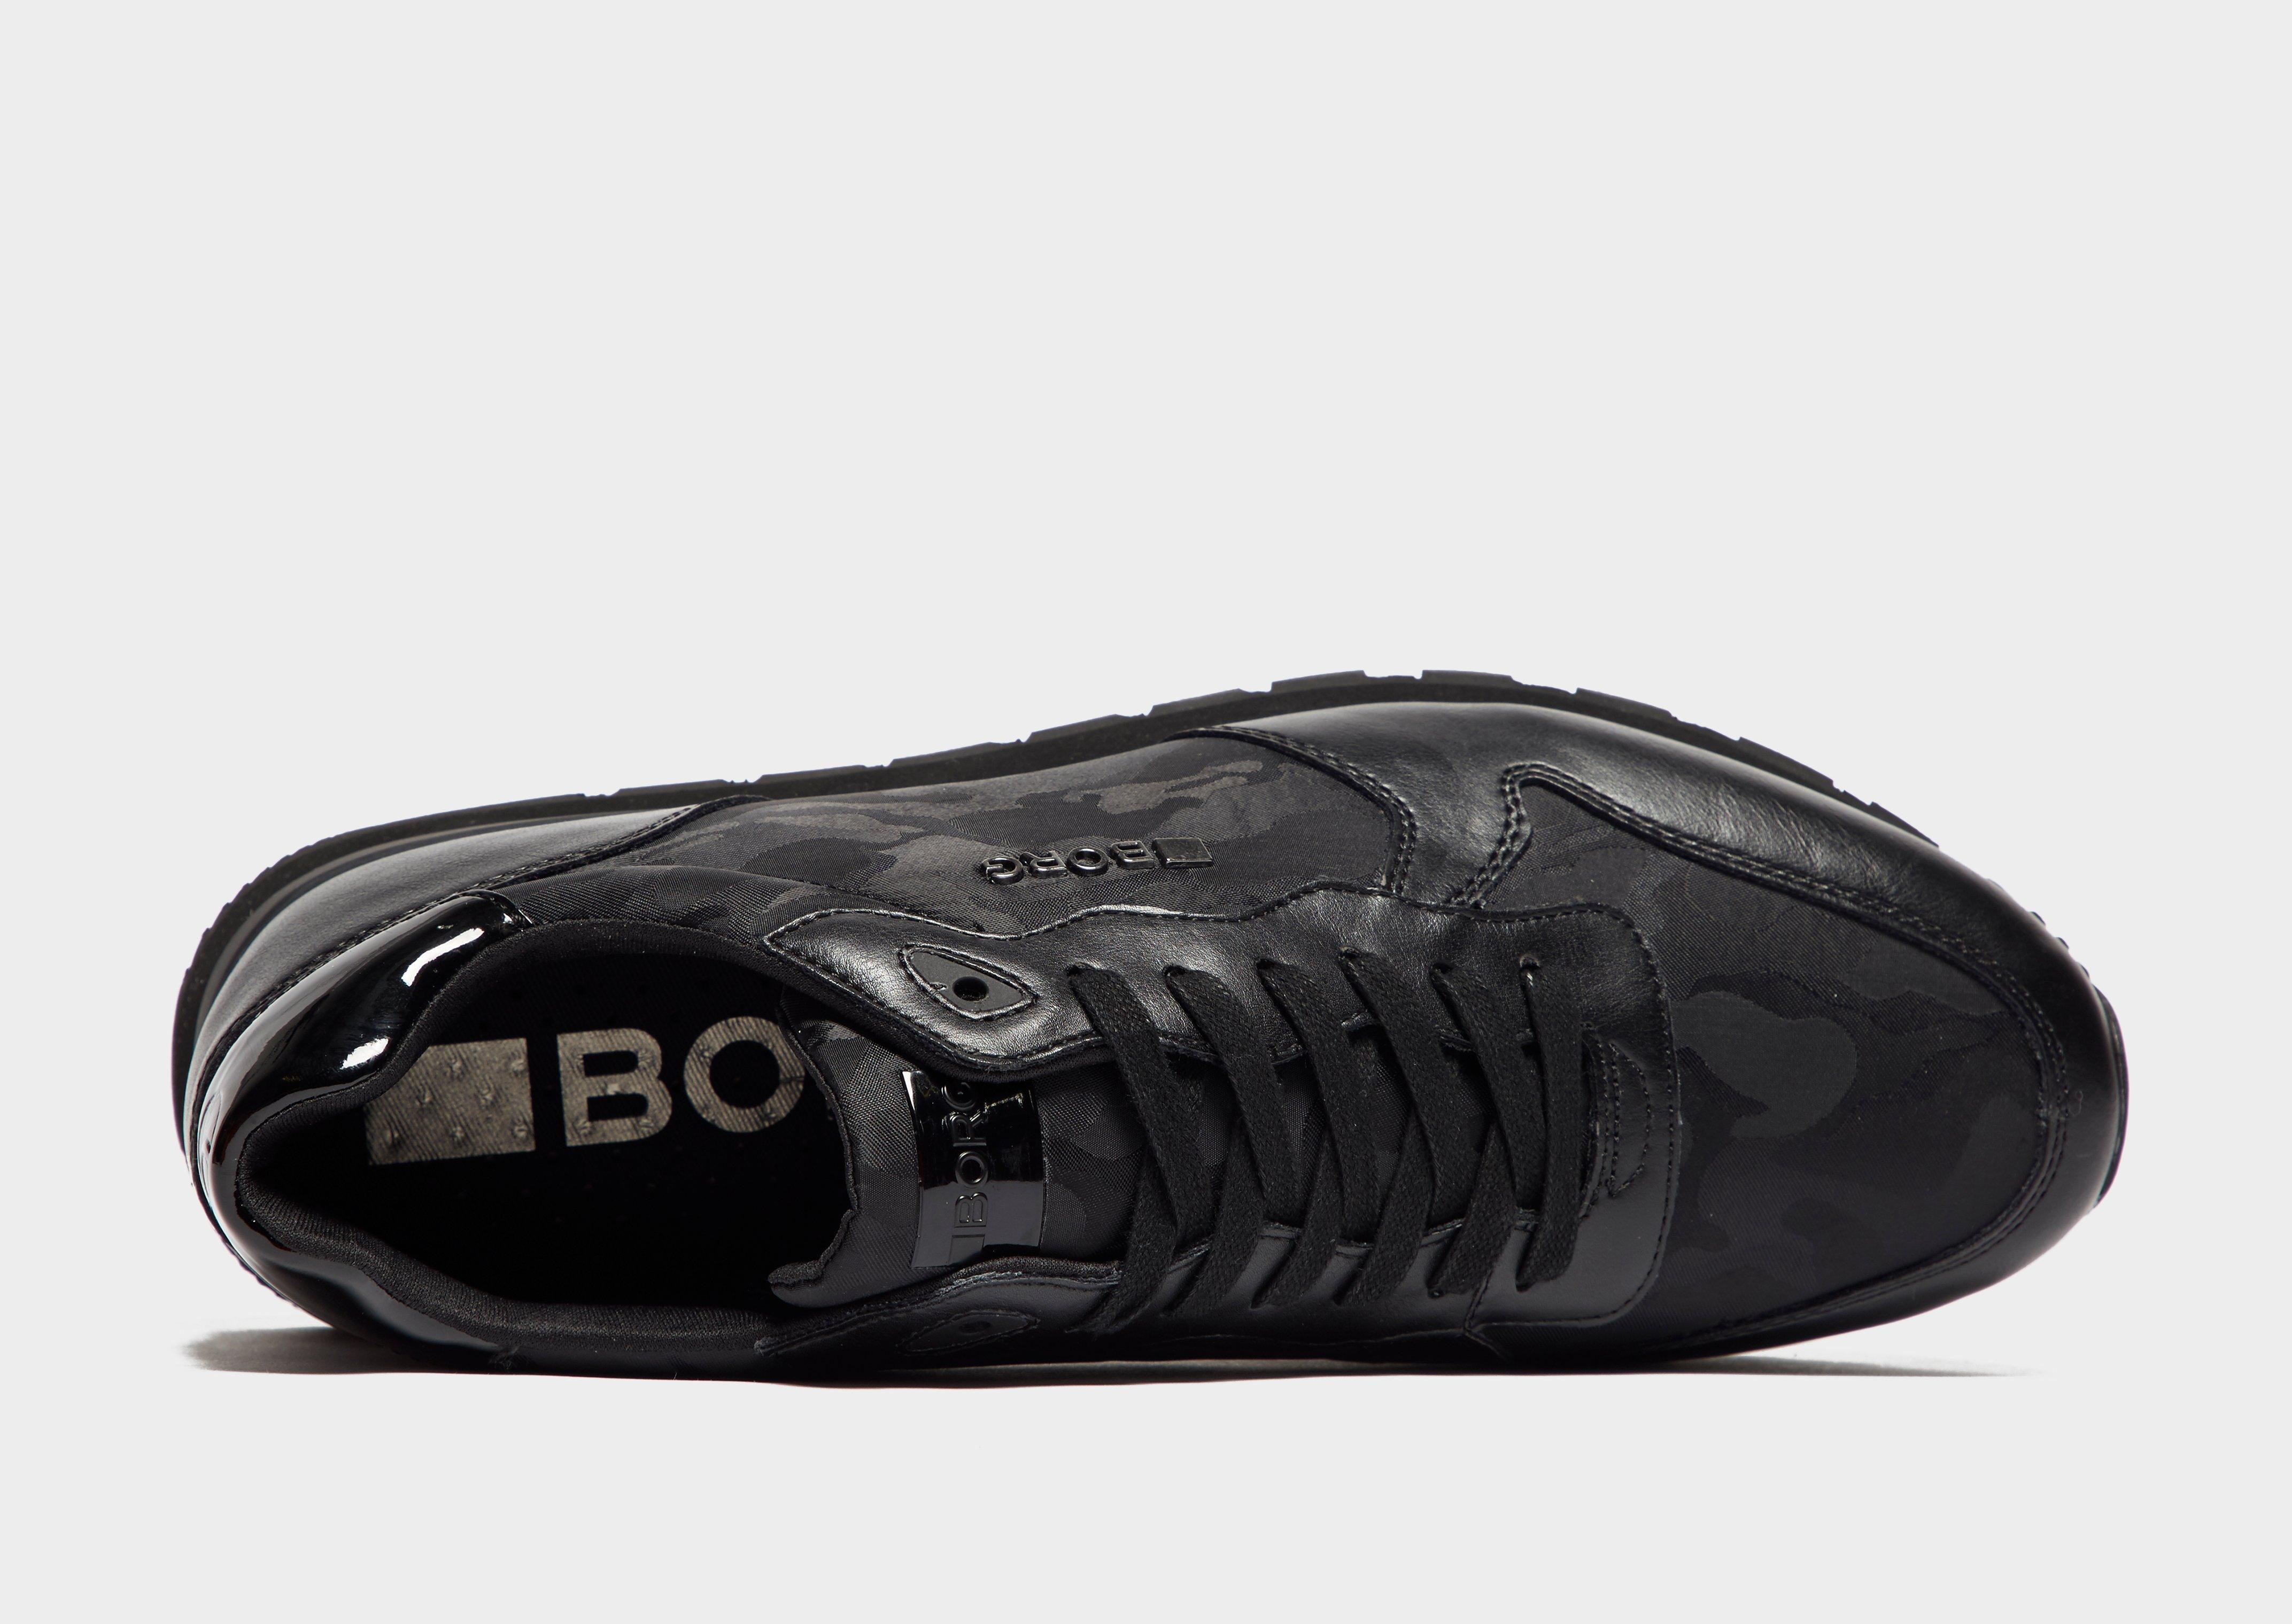 Björn Borg Leather R600 Camo in Black 